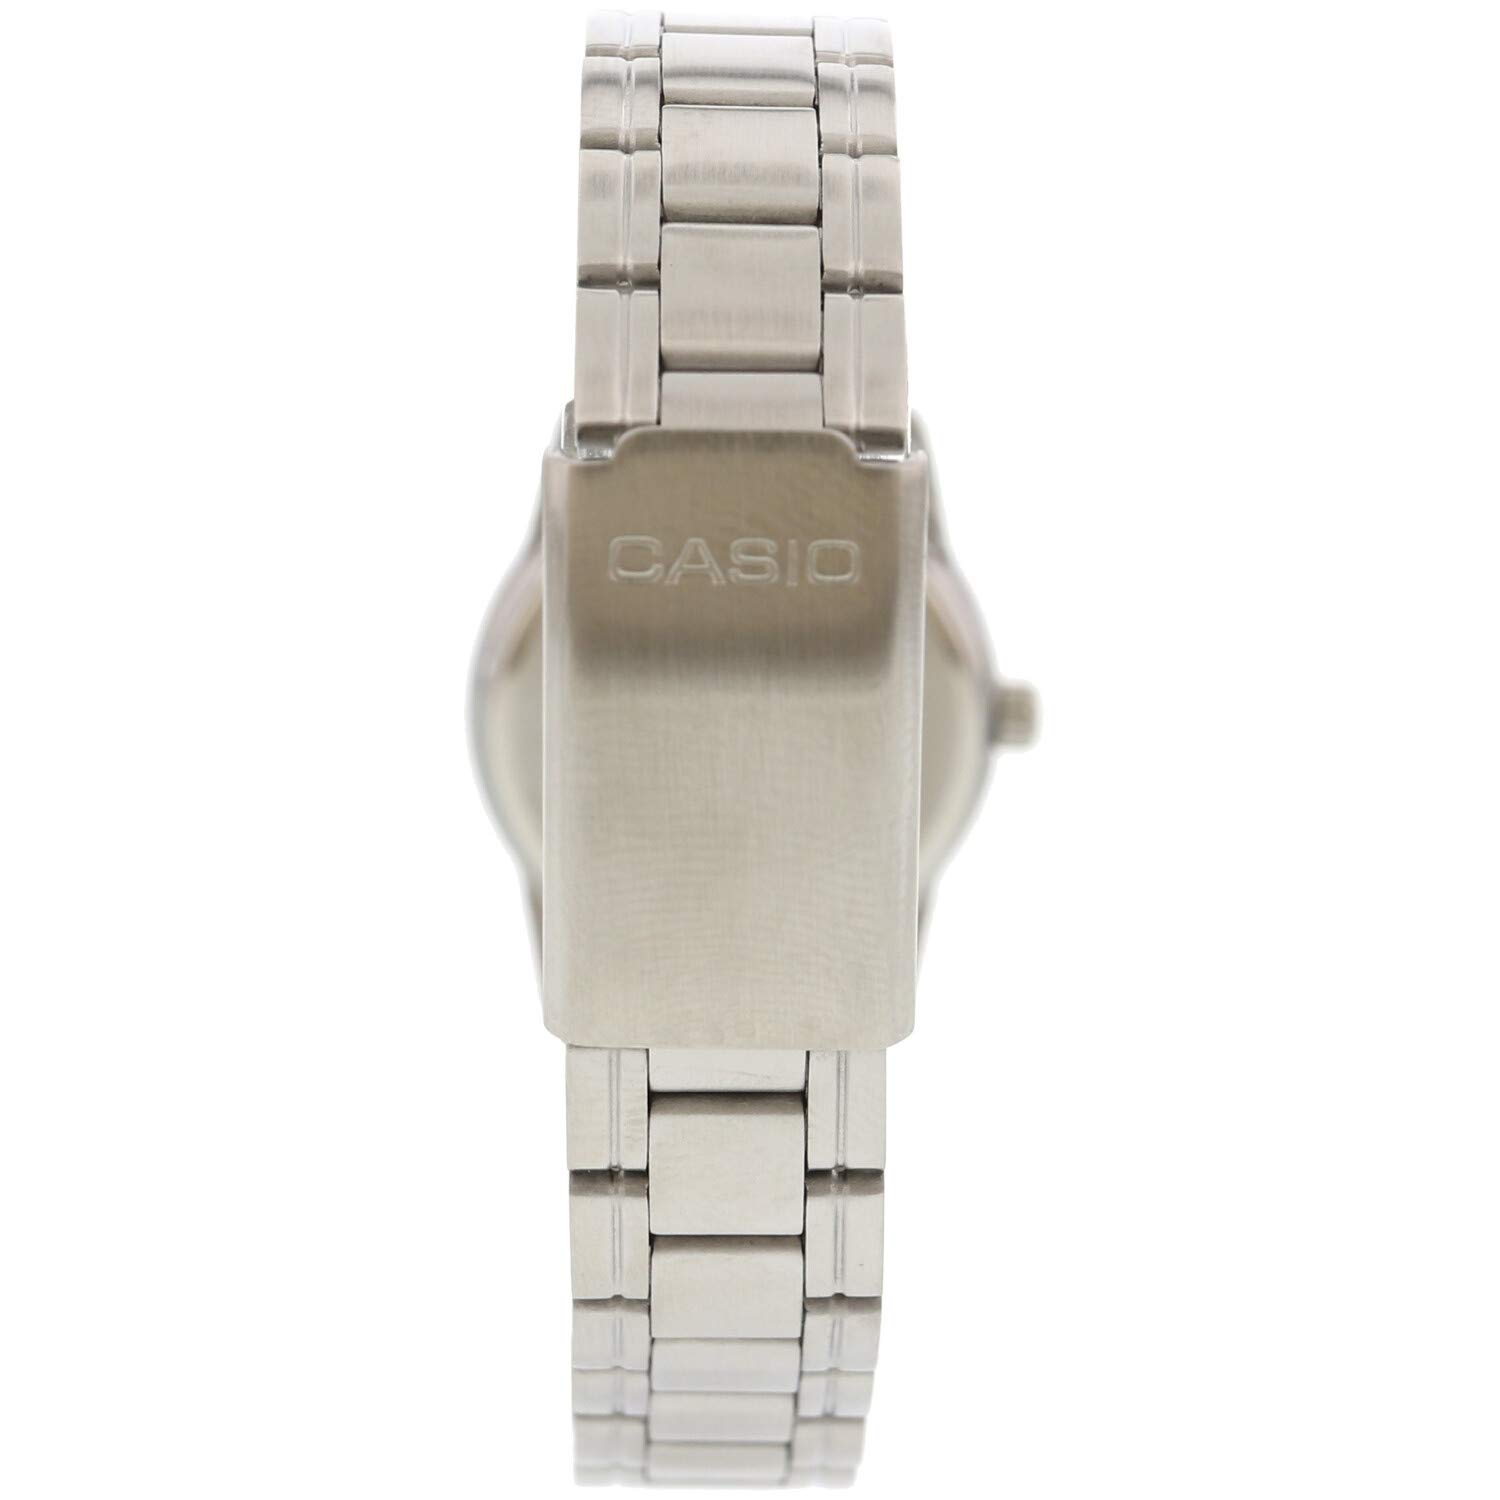 Casio Women's LTPV001D-7B Silver Metal Quartz Watch